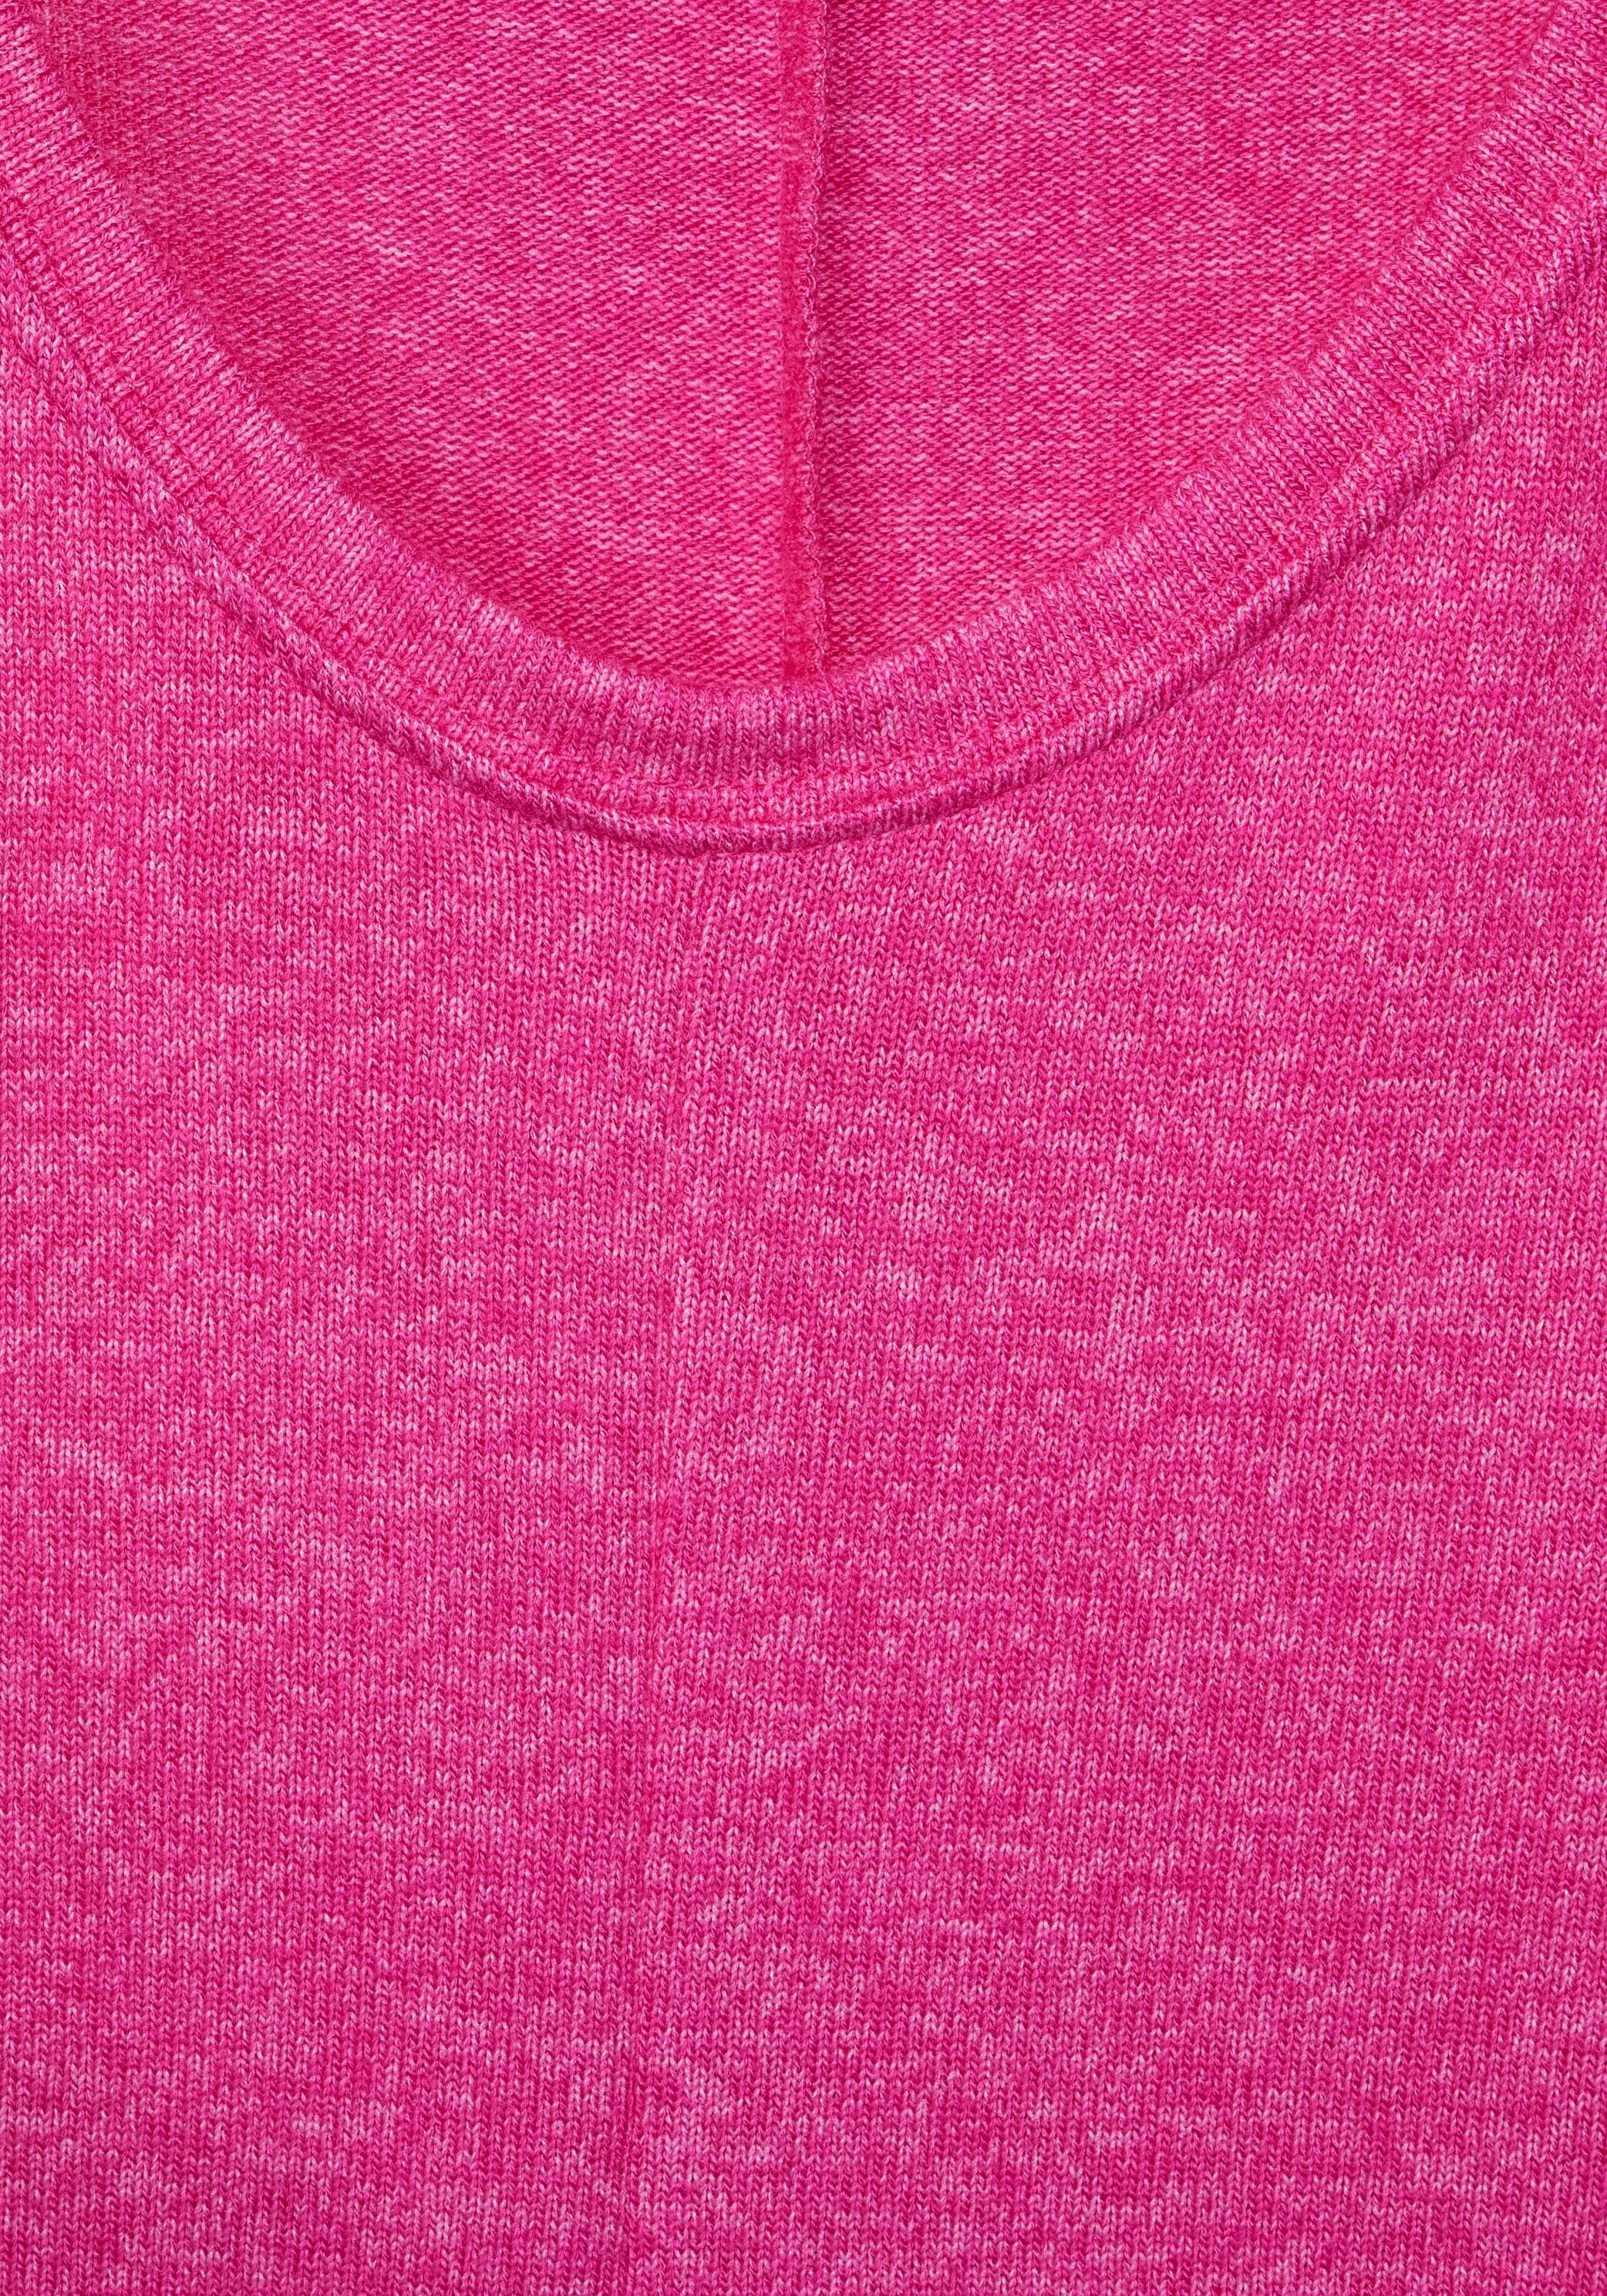 lavish Ellen 3/4-Arm-Shirt Style ONE STREET Melange-Optik in pink